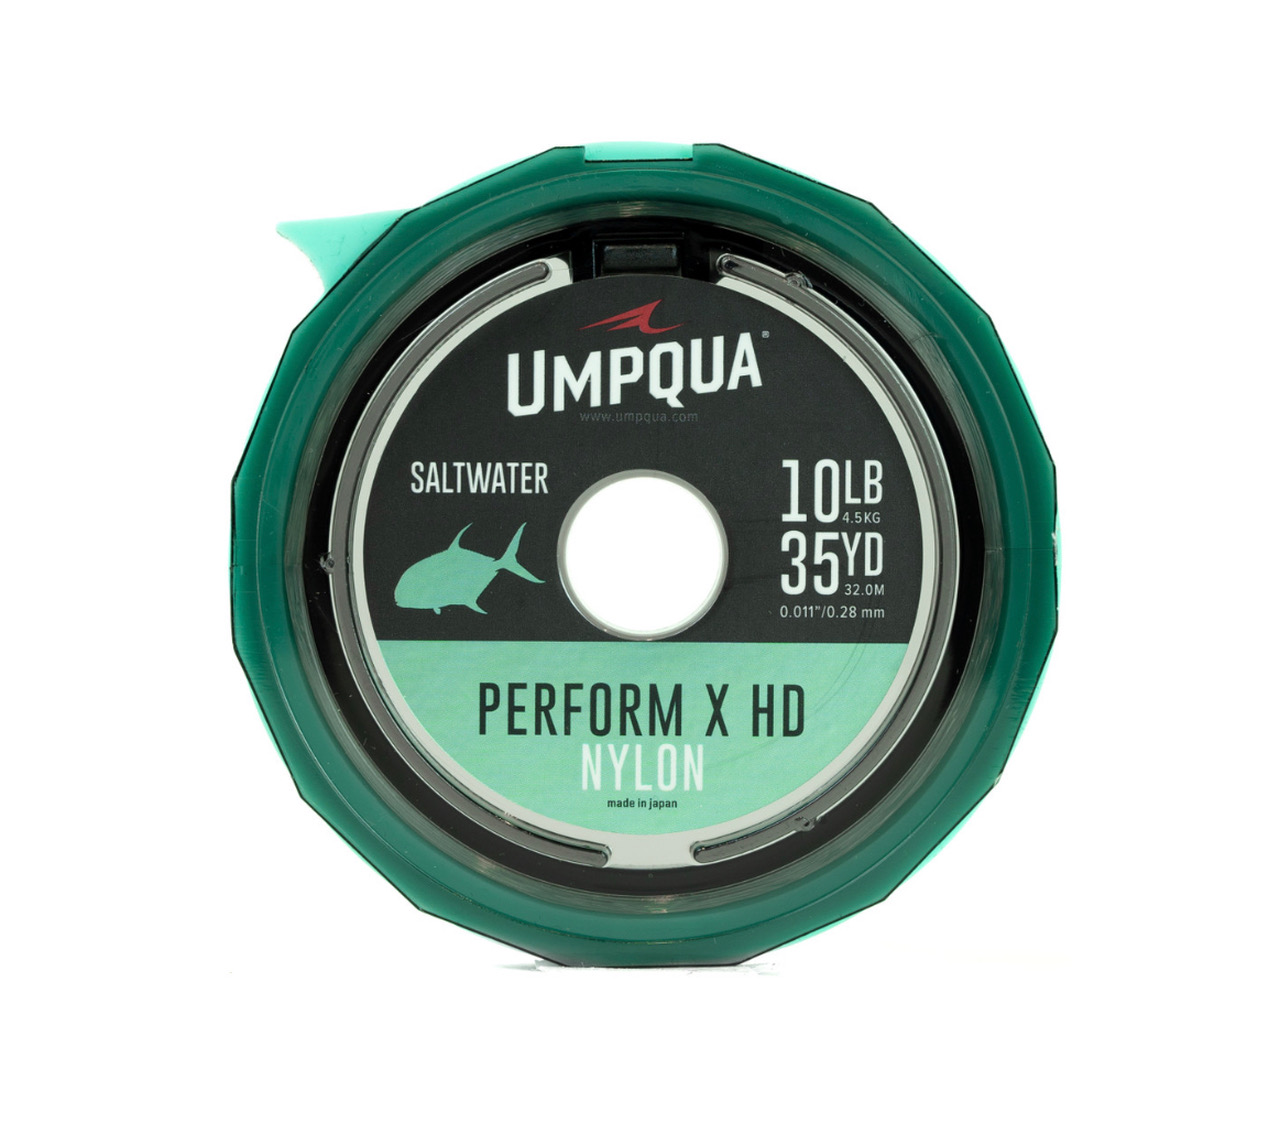 Umpqua Perform X HD Saltwater Nylon Tippet - 35yd - 12lb